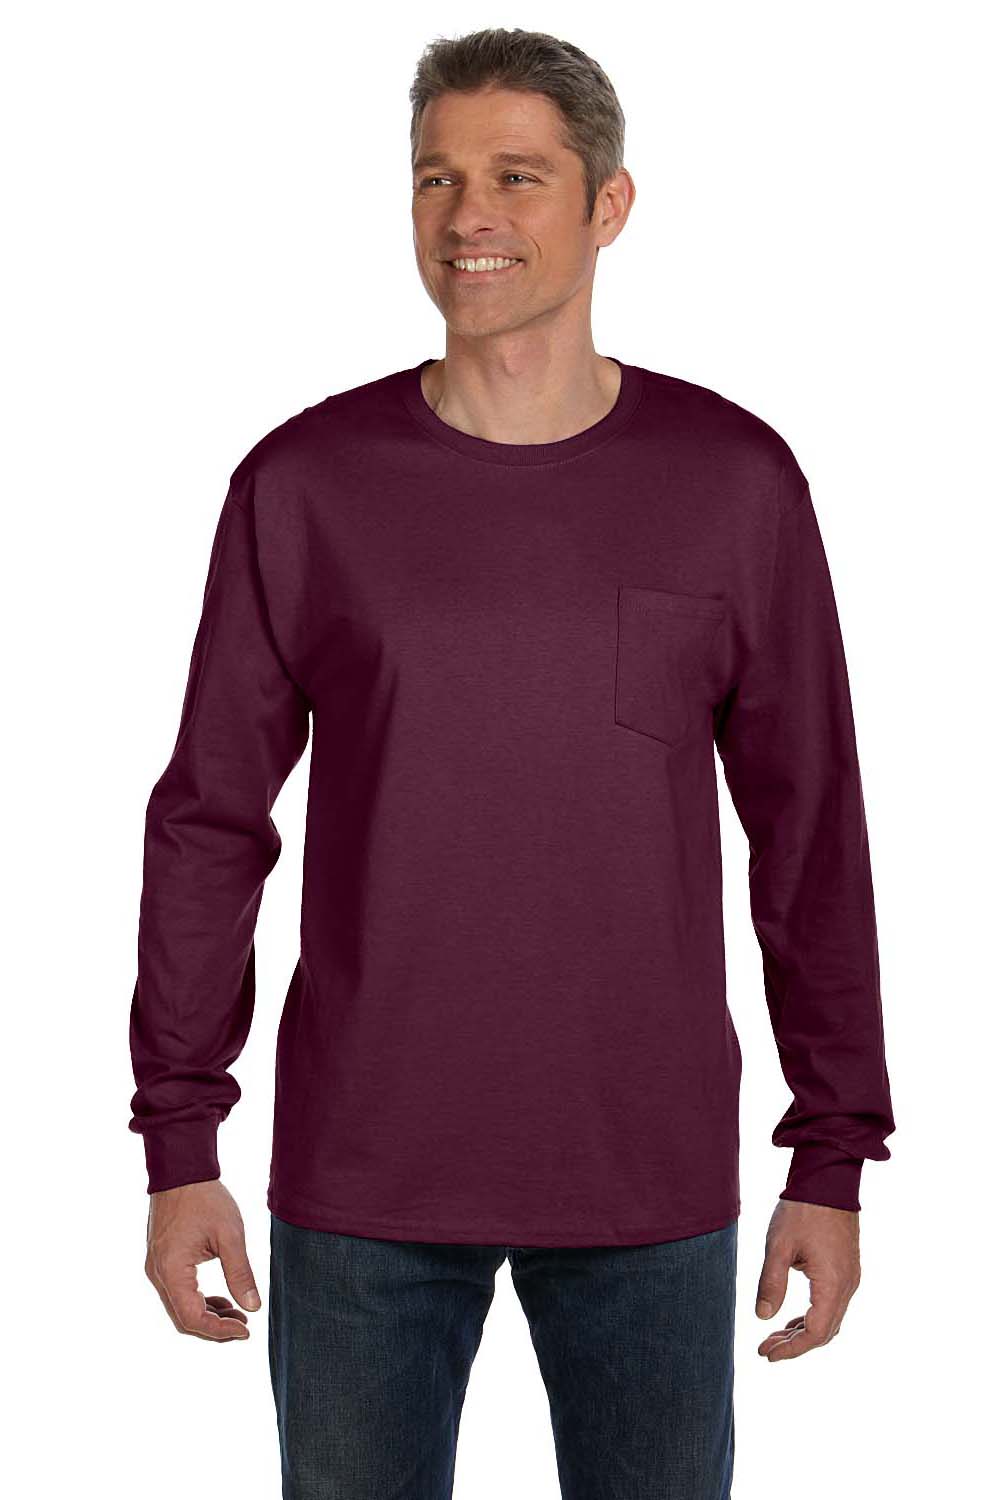 Hanes 5596 Mens ComfortSoft Long Sleeve Crewneck T-Shirt w/ Pocket Maroon Front